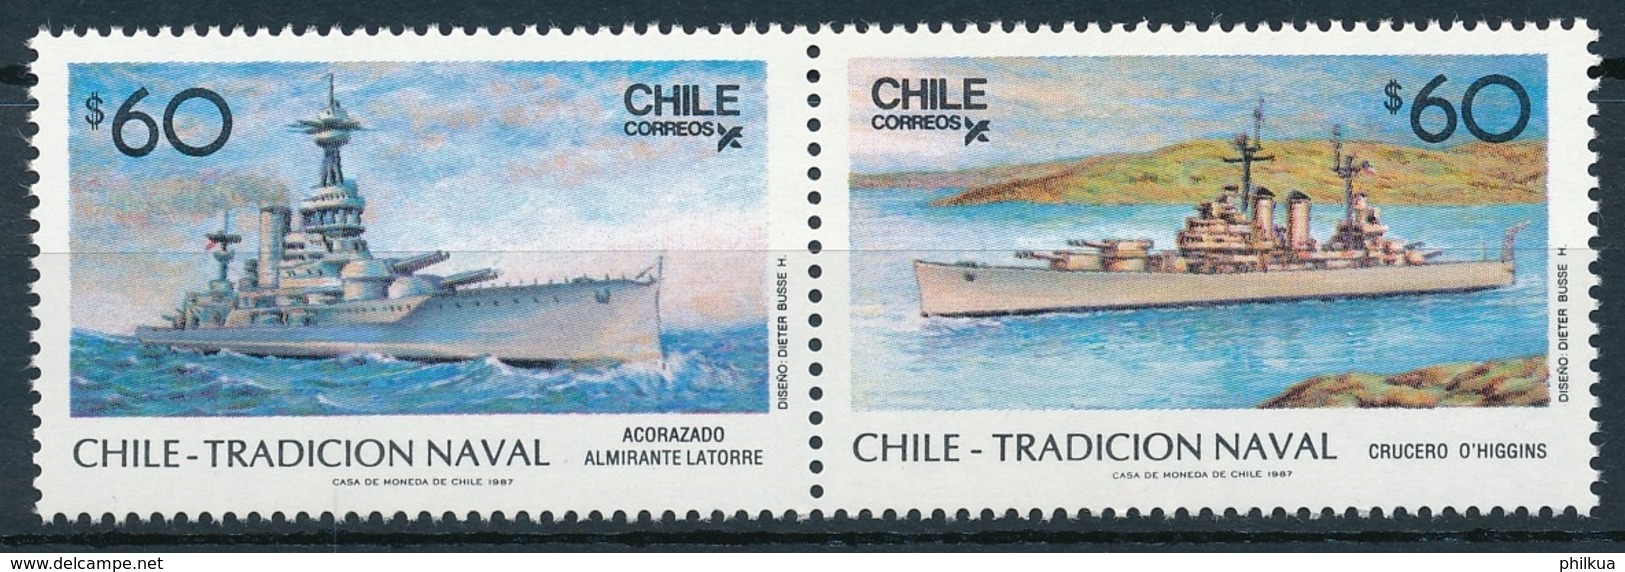 Chile - Postfrisch/** - Schiffe, Seefahrt, Segelschiffe, Etc. / Ships, Seafaring, Sailing Ships - Maritime